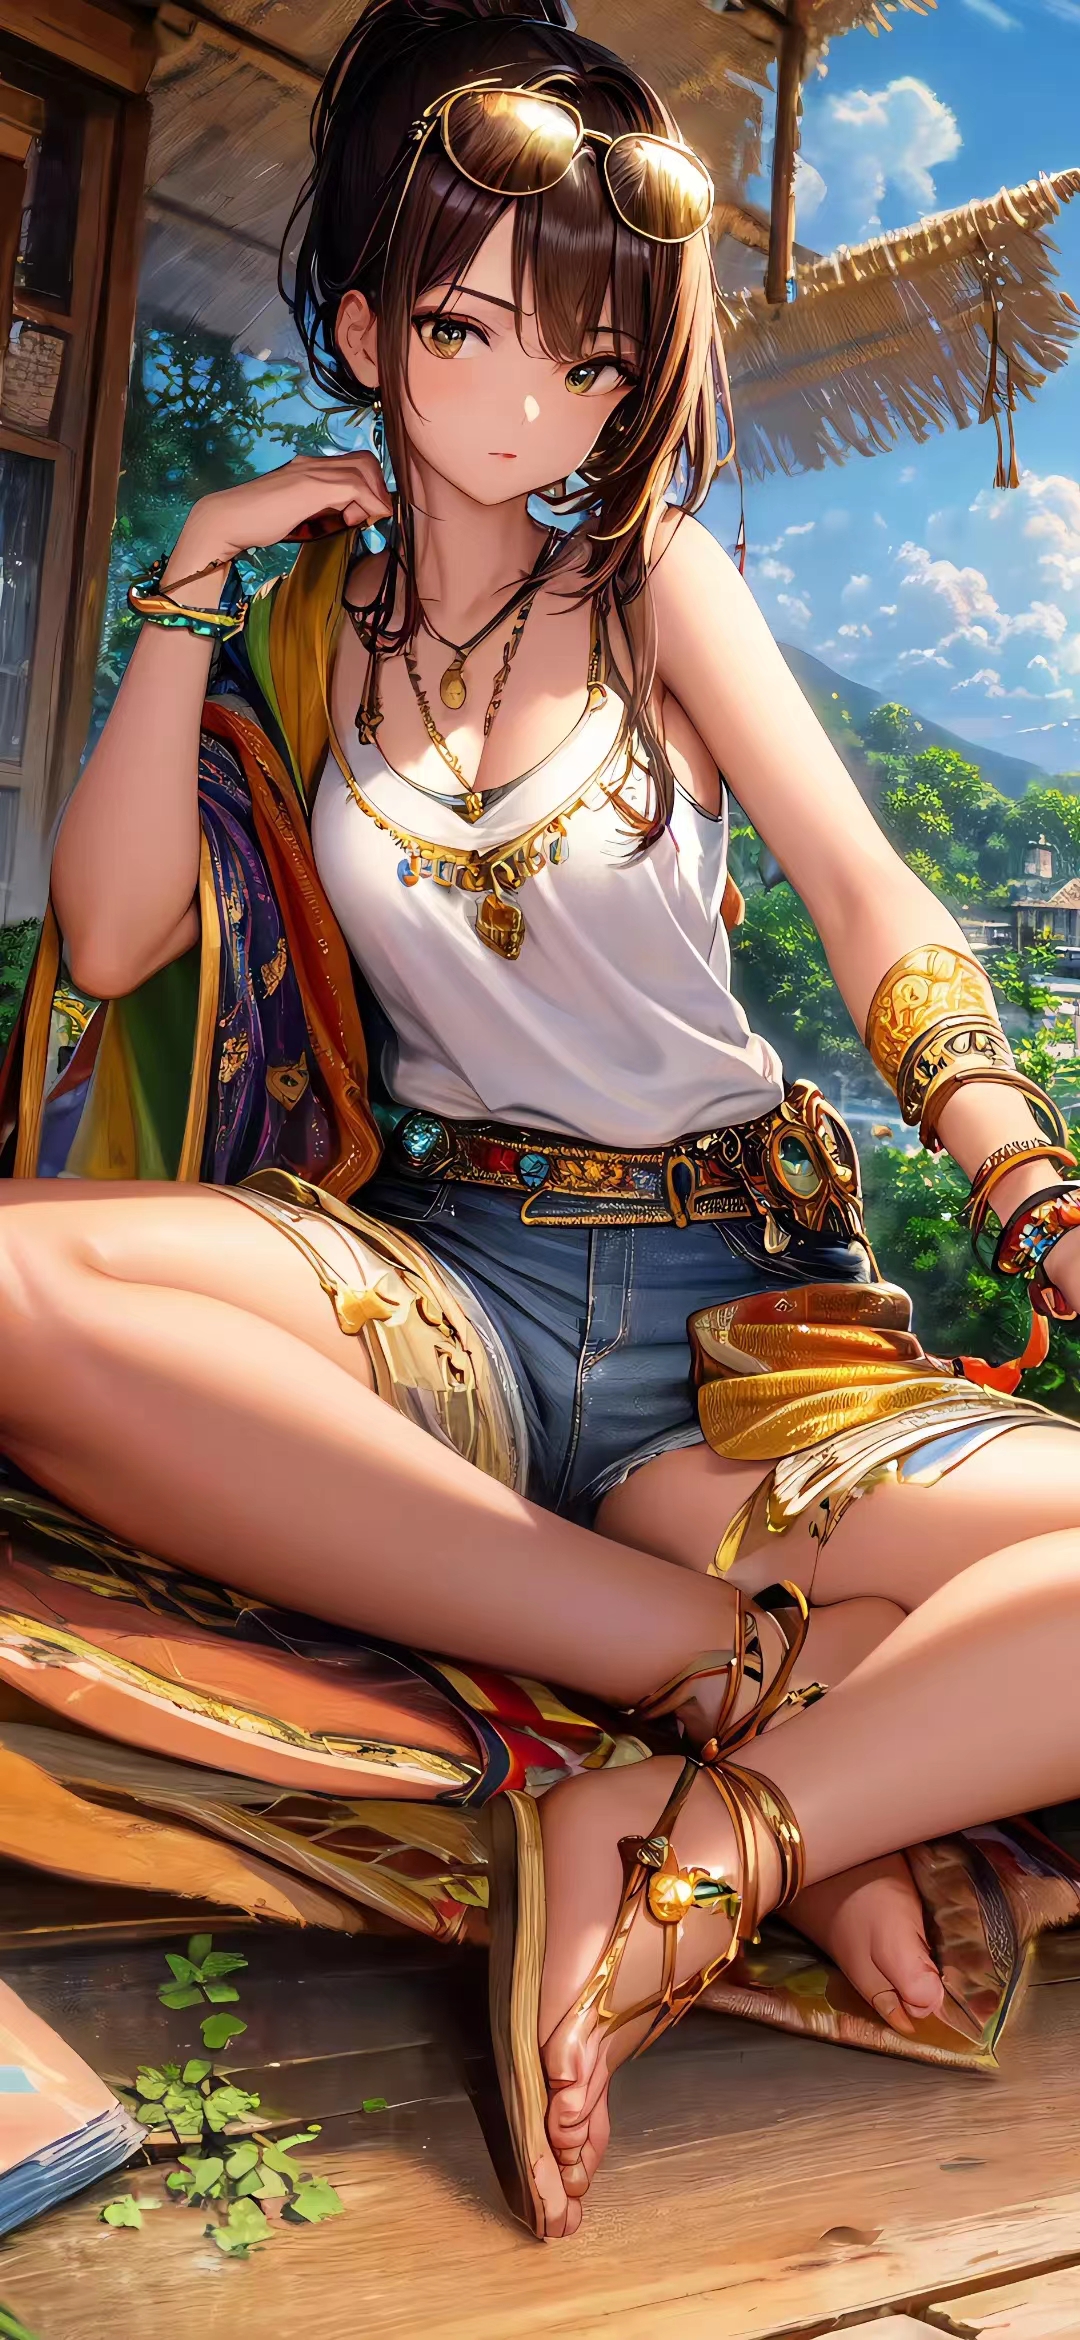 Ai Art Women Anime Girls Vertical Sunglasses Shorts Legs Crossed Jewelry Necklace Feet 1080x2340